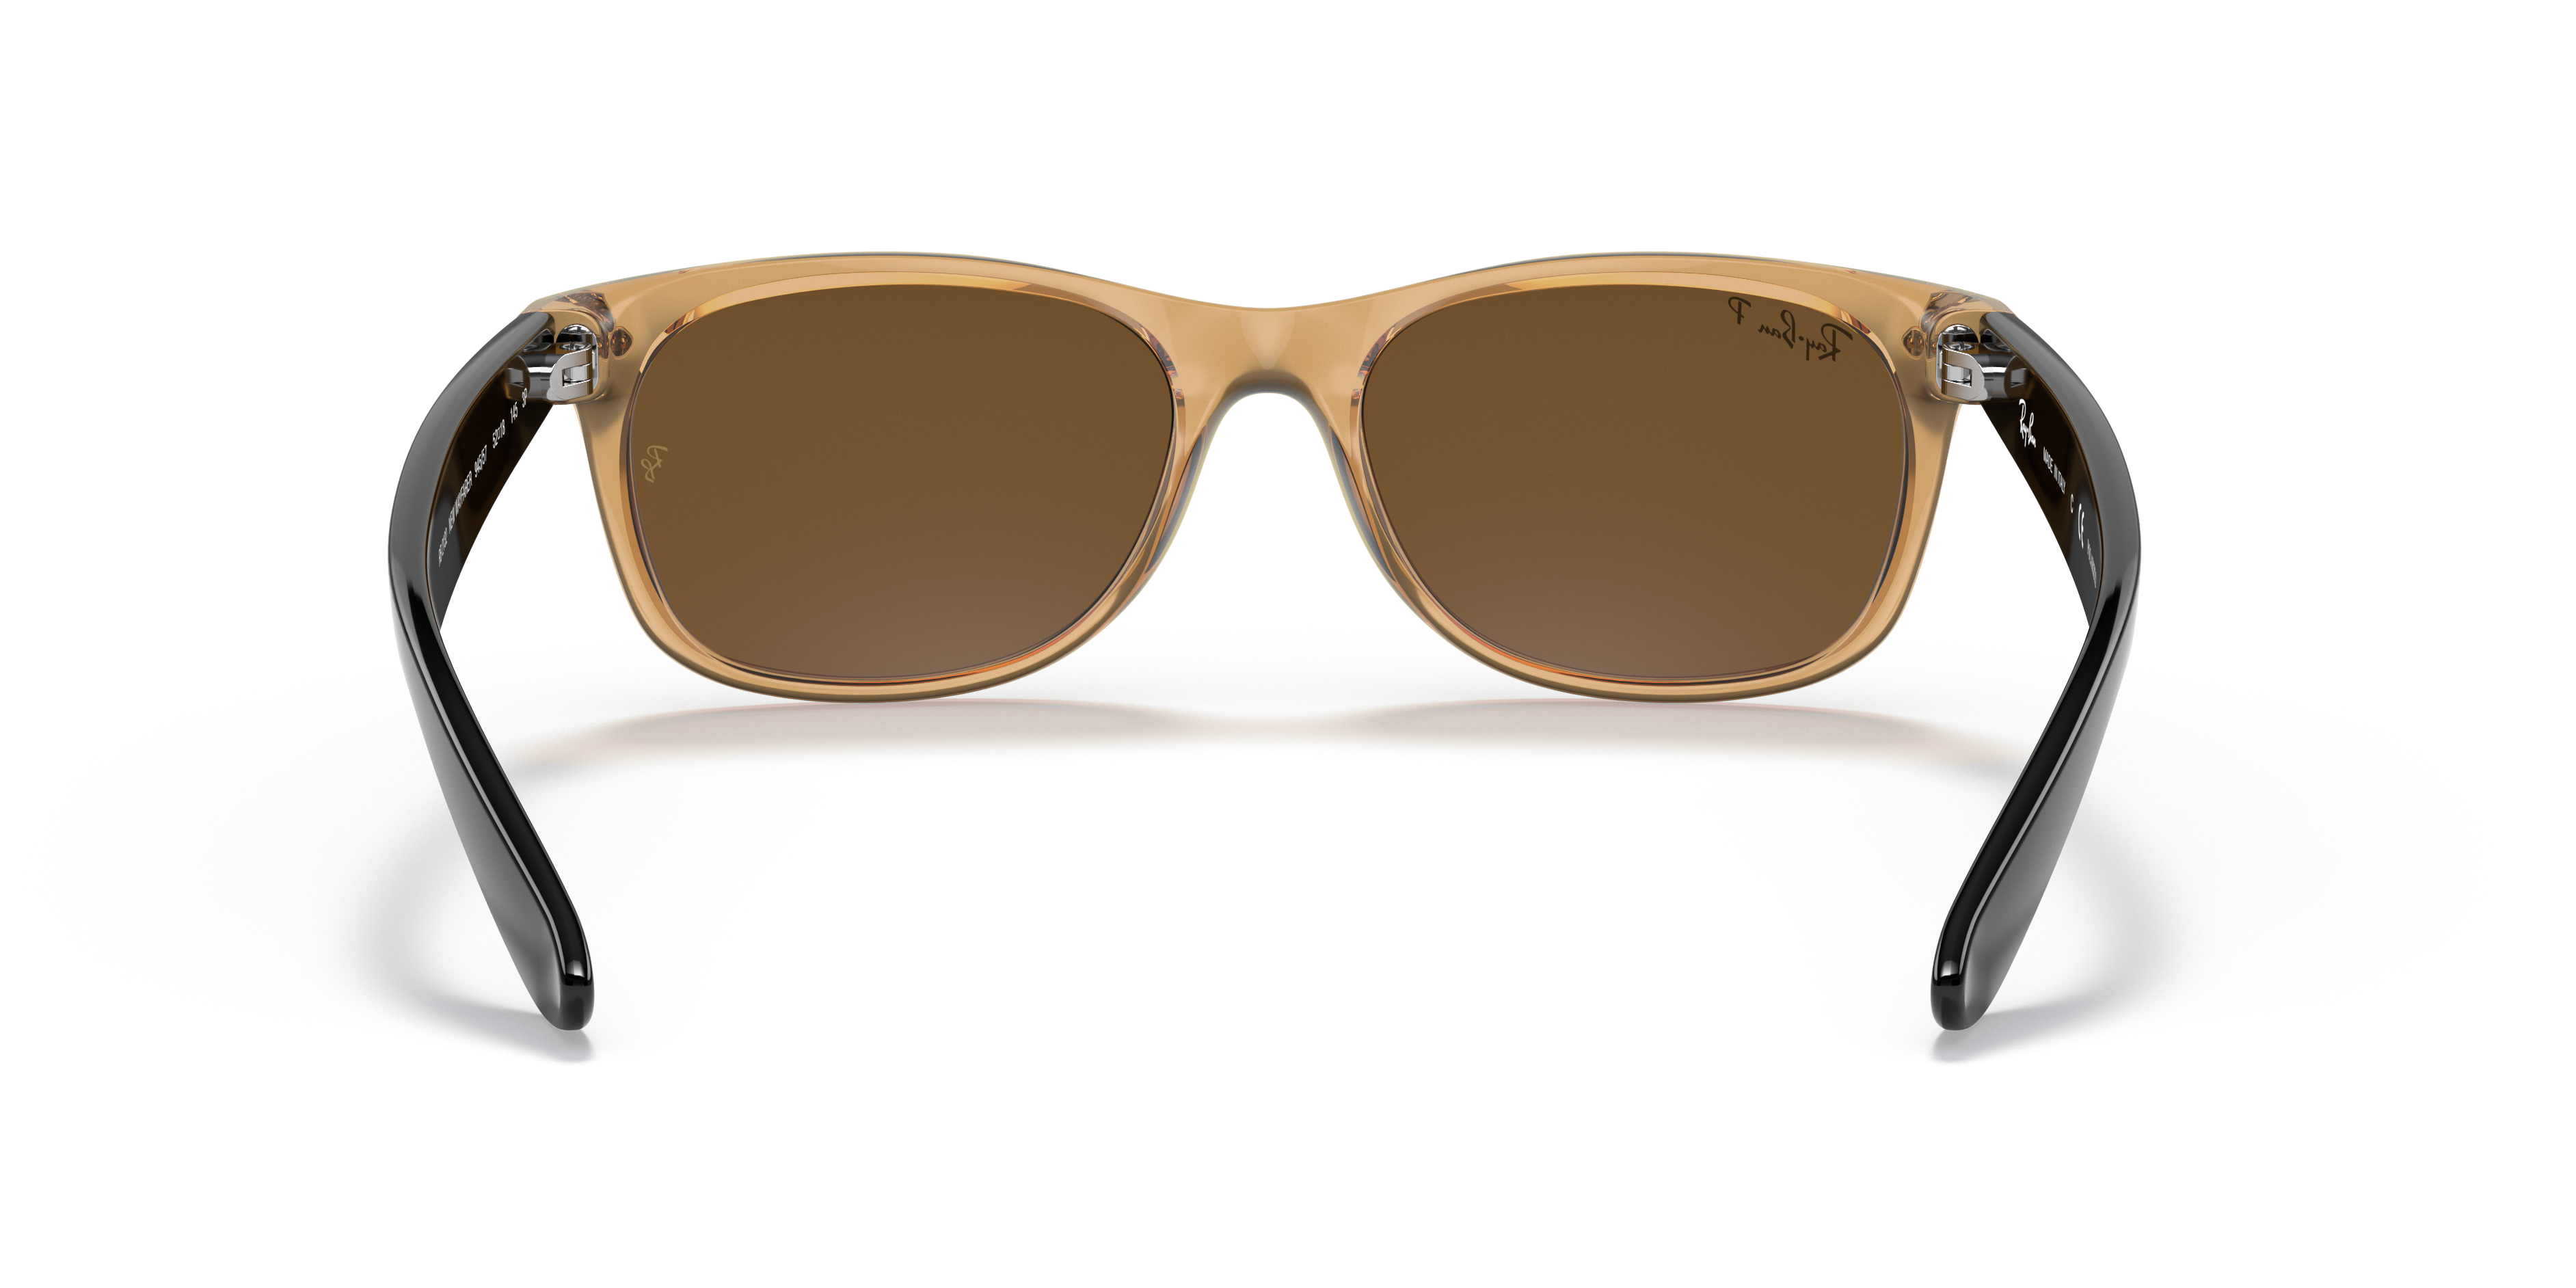 New Wayfarer Bicolor Sunglasses in Honey and Brown | Ray-Ban®